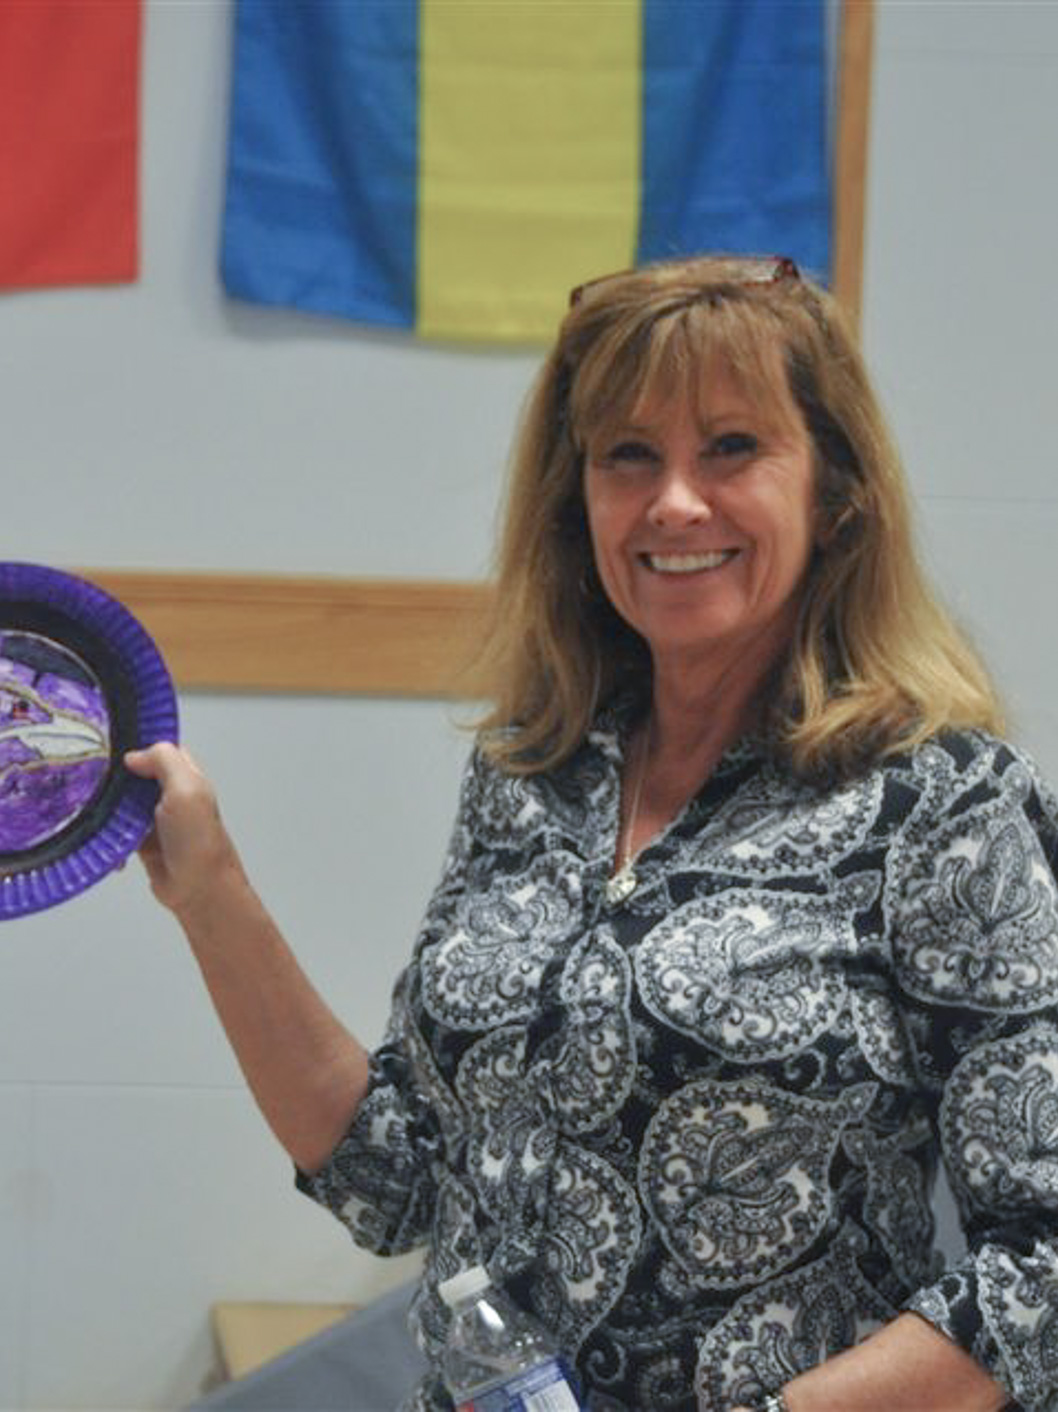 Marci Spilman, Grade 6 Teacher at McLean School, smiles while holding up her art